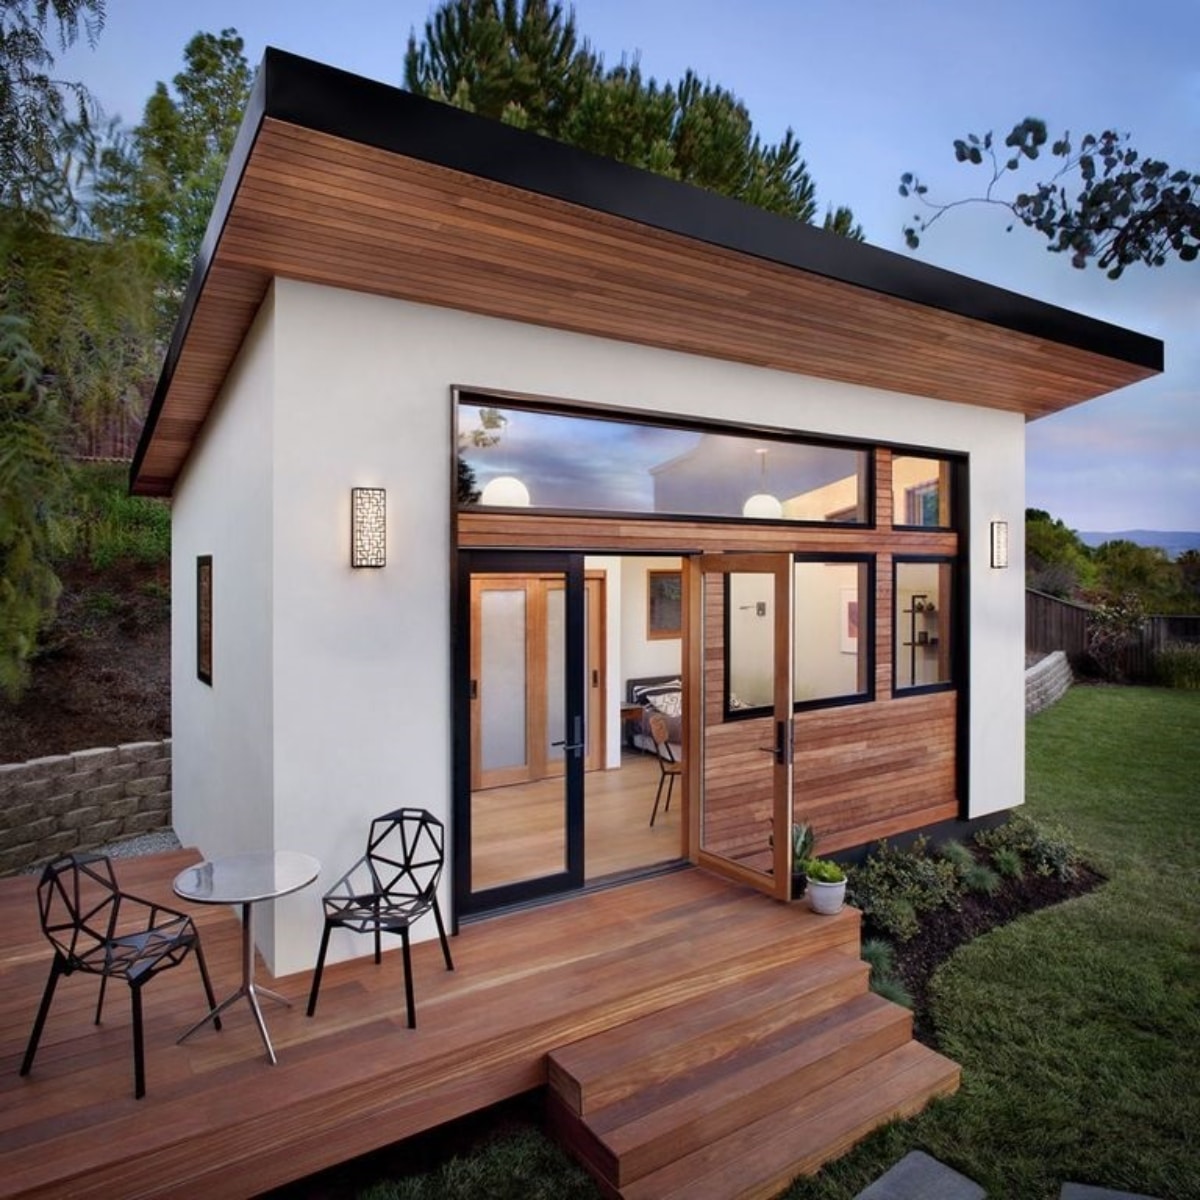 Luxurious prefabricated tiny house